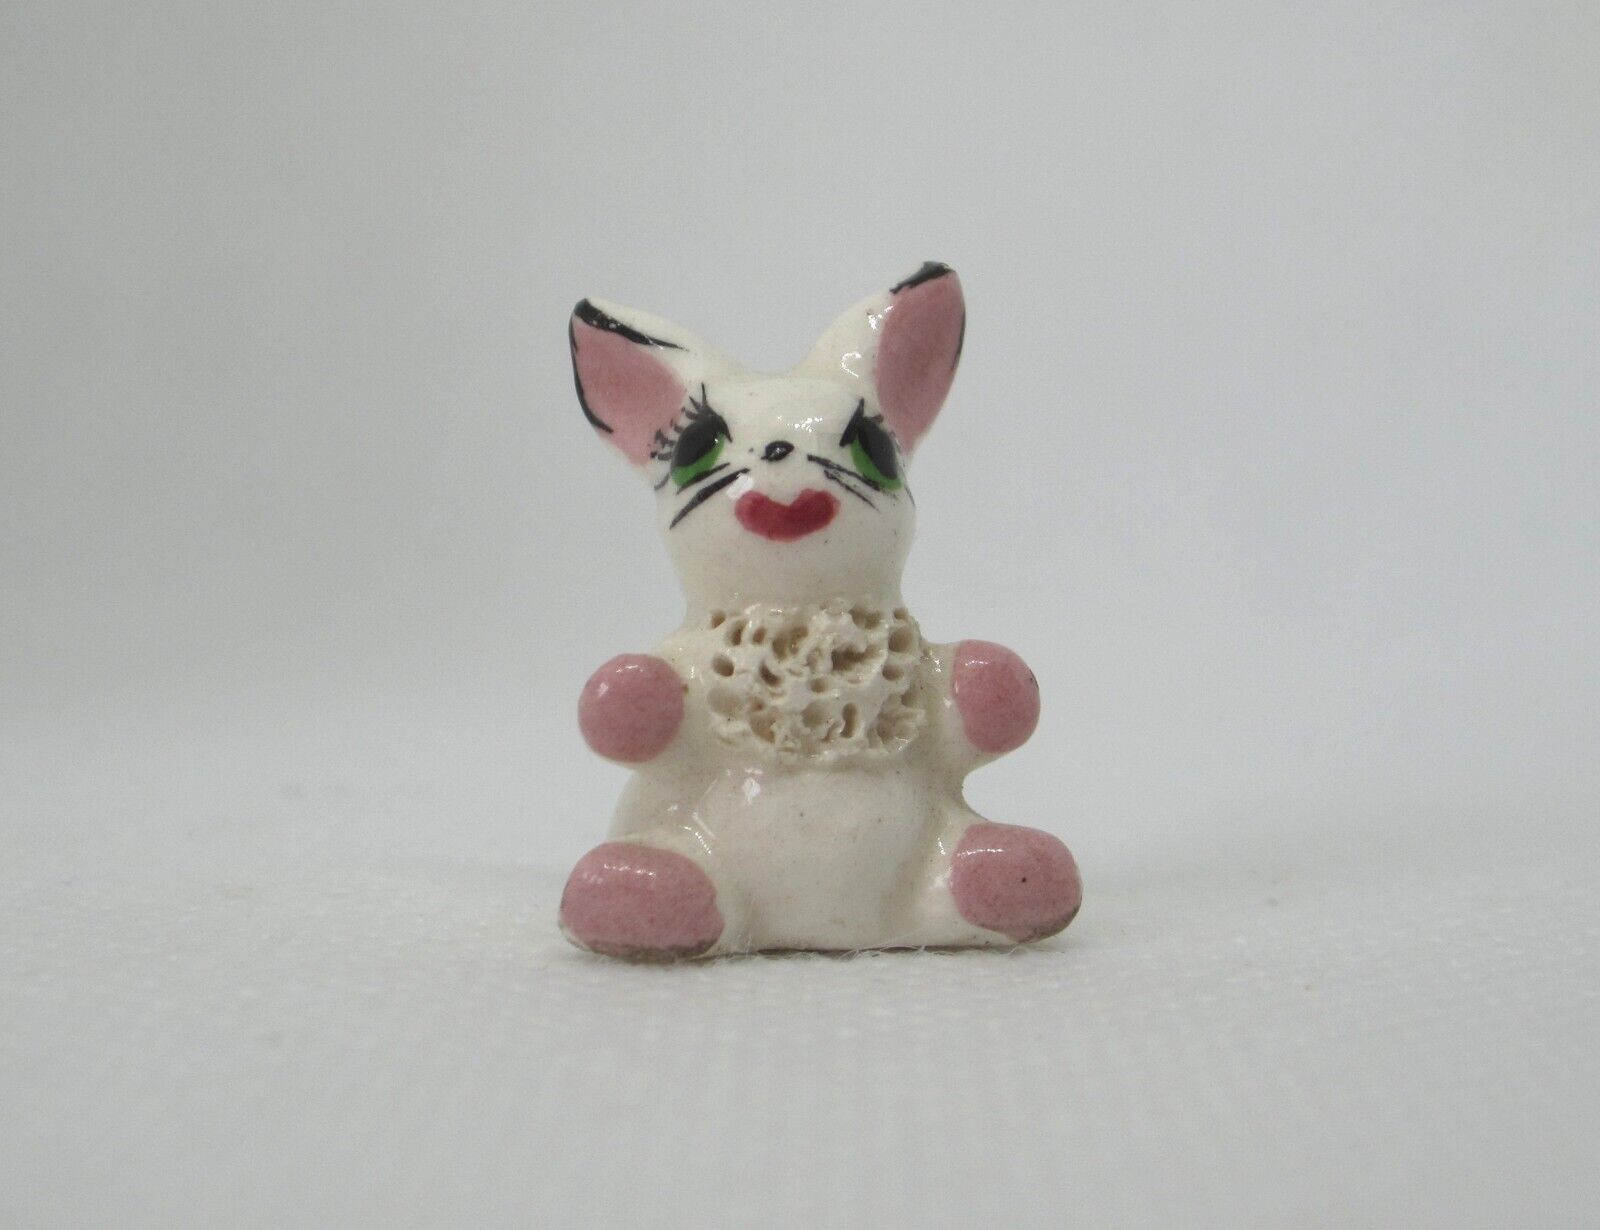 White bunny rabbit miniature figurine with eyelashes